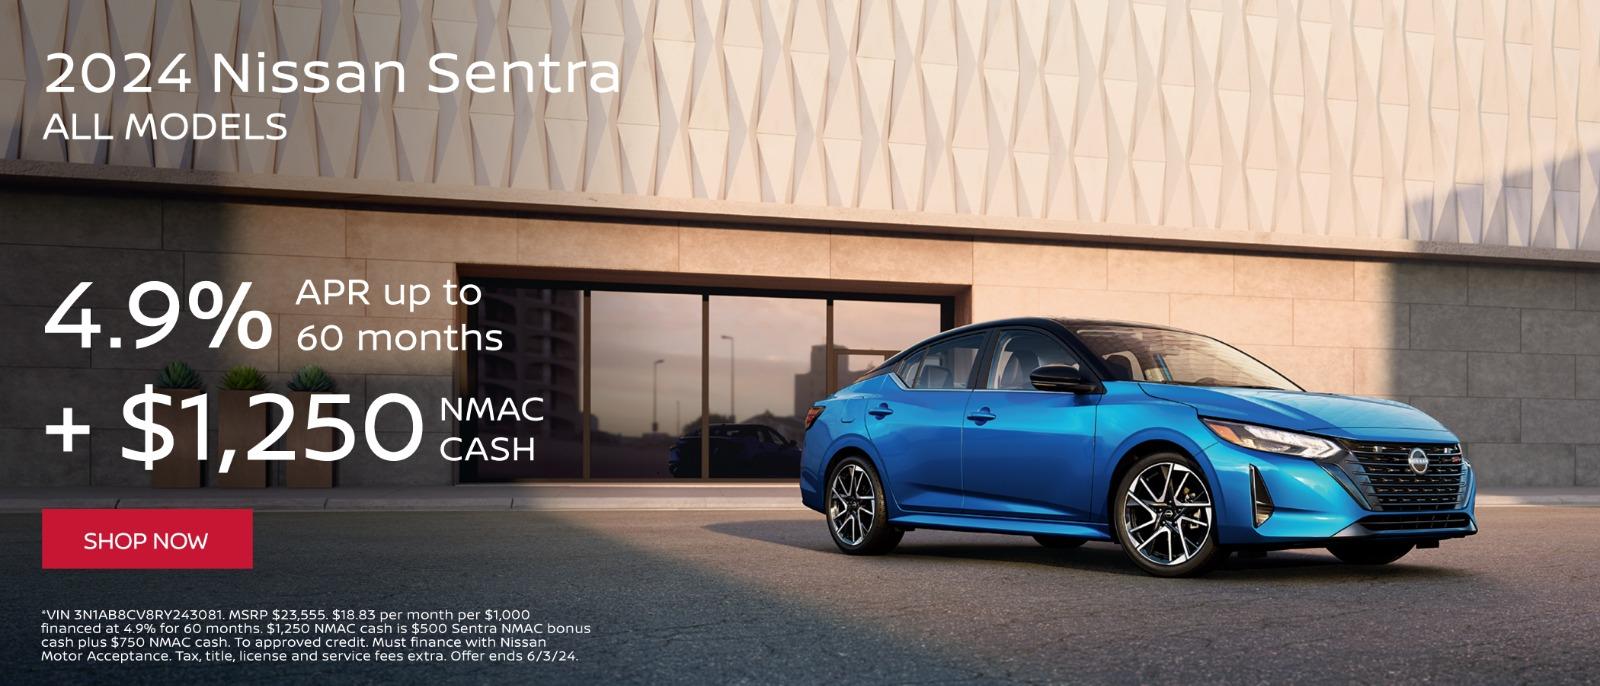 2024 Nissan Sentra 4.9% APR up to 60 months +$1,250 NMAC Cash